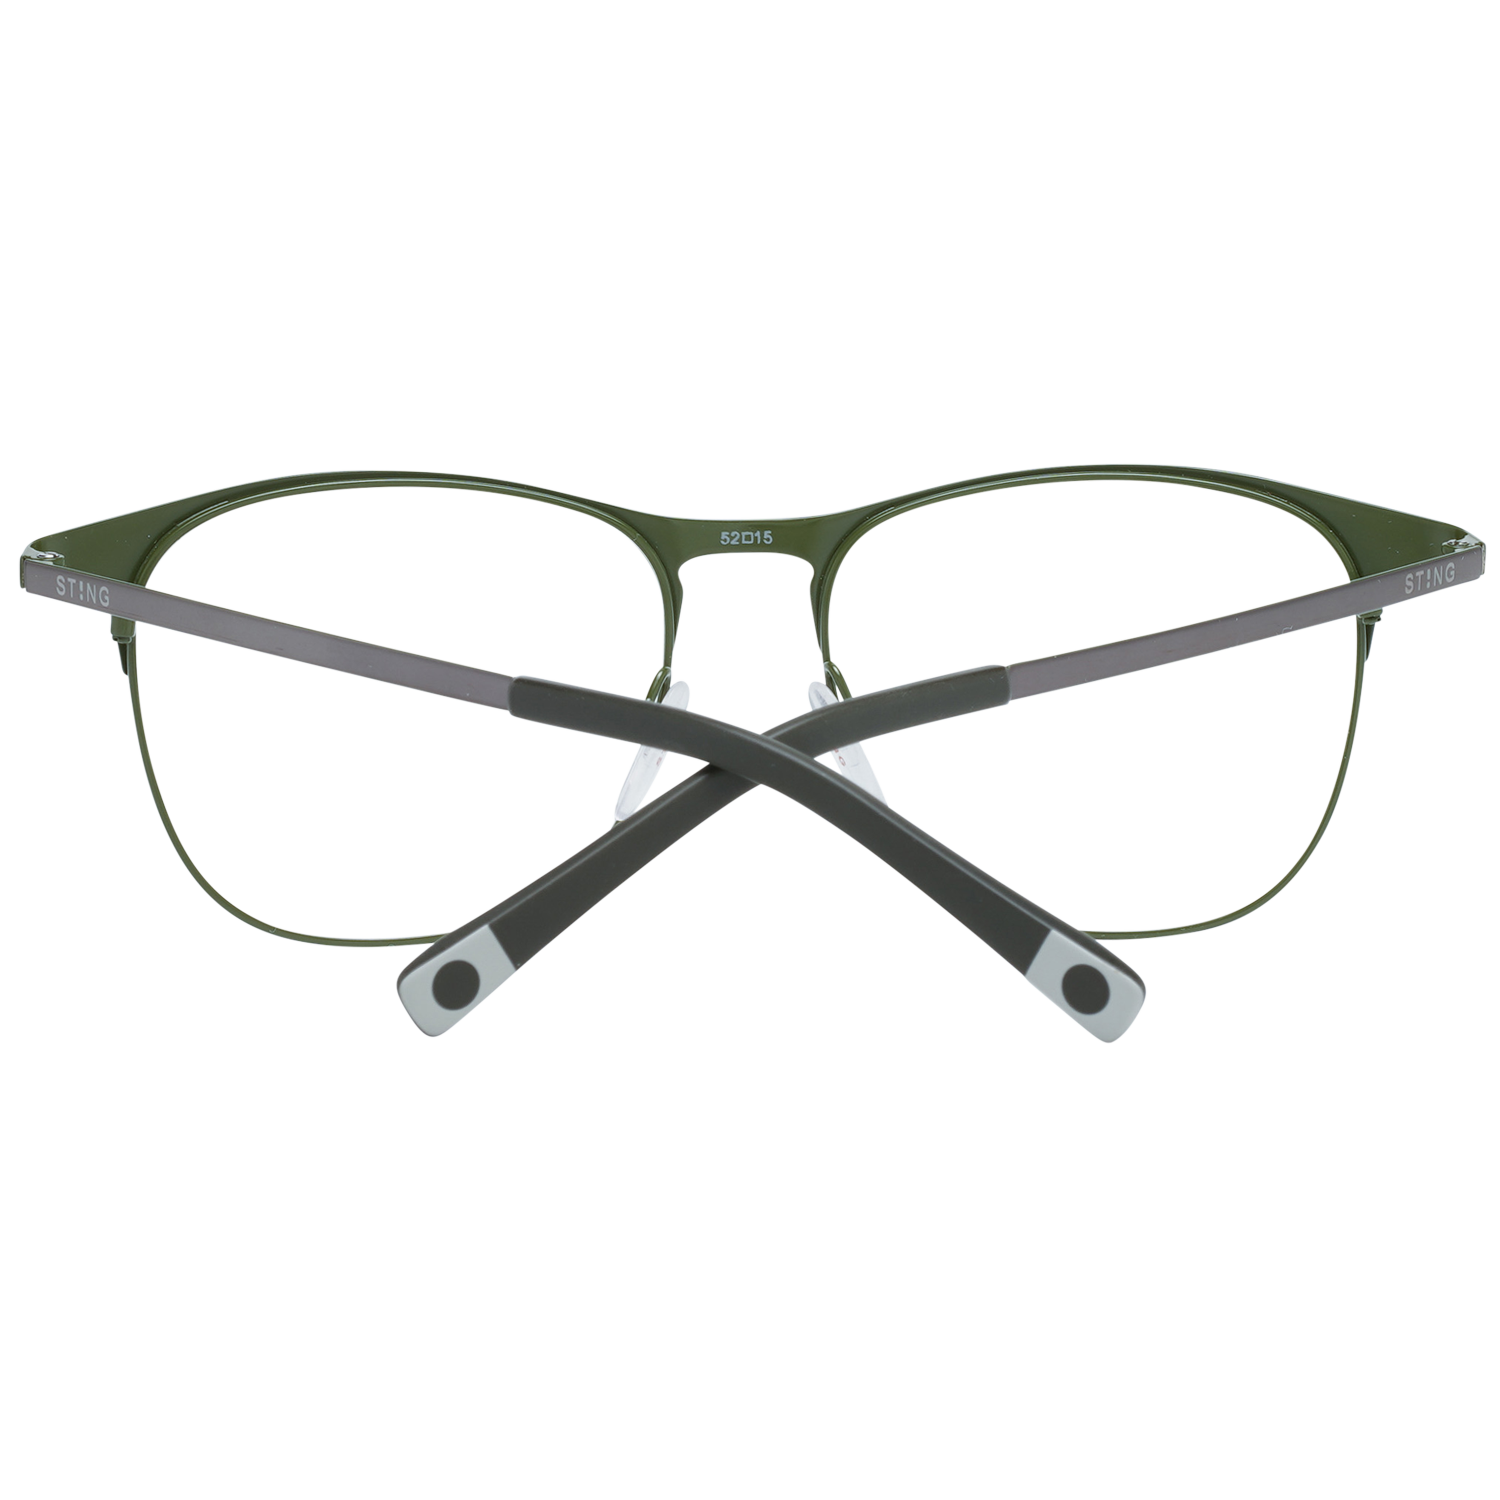 Sting Frames Sting Optical Frame VST017 0E80 52 Eyeglasses Eyewear UK USA Australia 